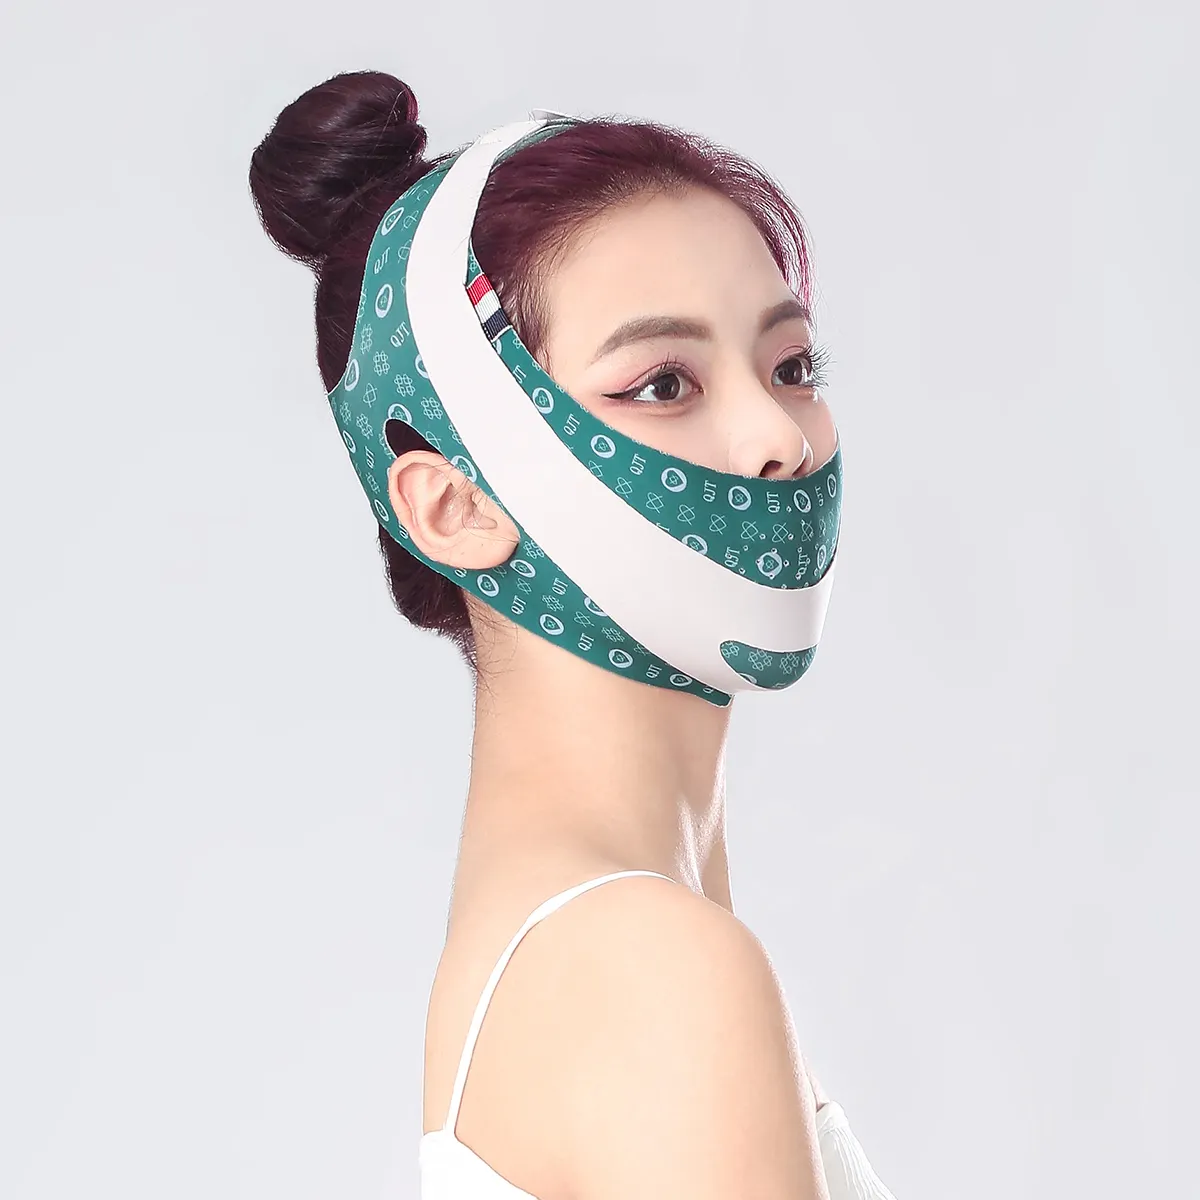 New Face Lift V Shaper Mask Facial Slimming Bandage Chin Cheek Belt Anti Wrinkle Strap Beauty Neck Thin Care Tools